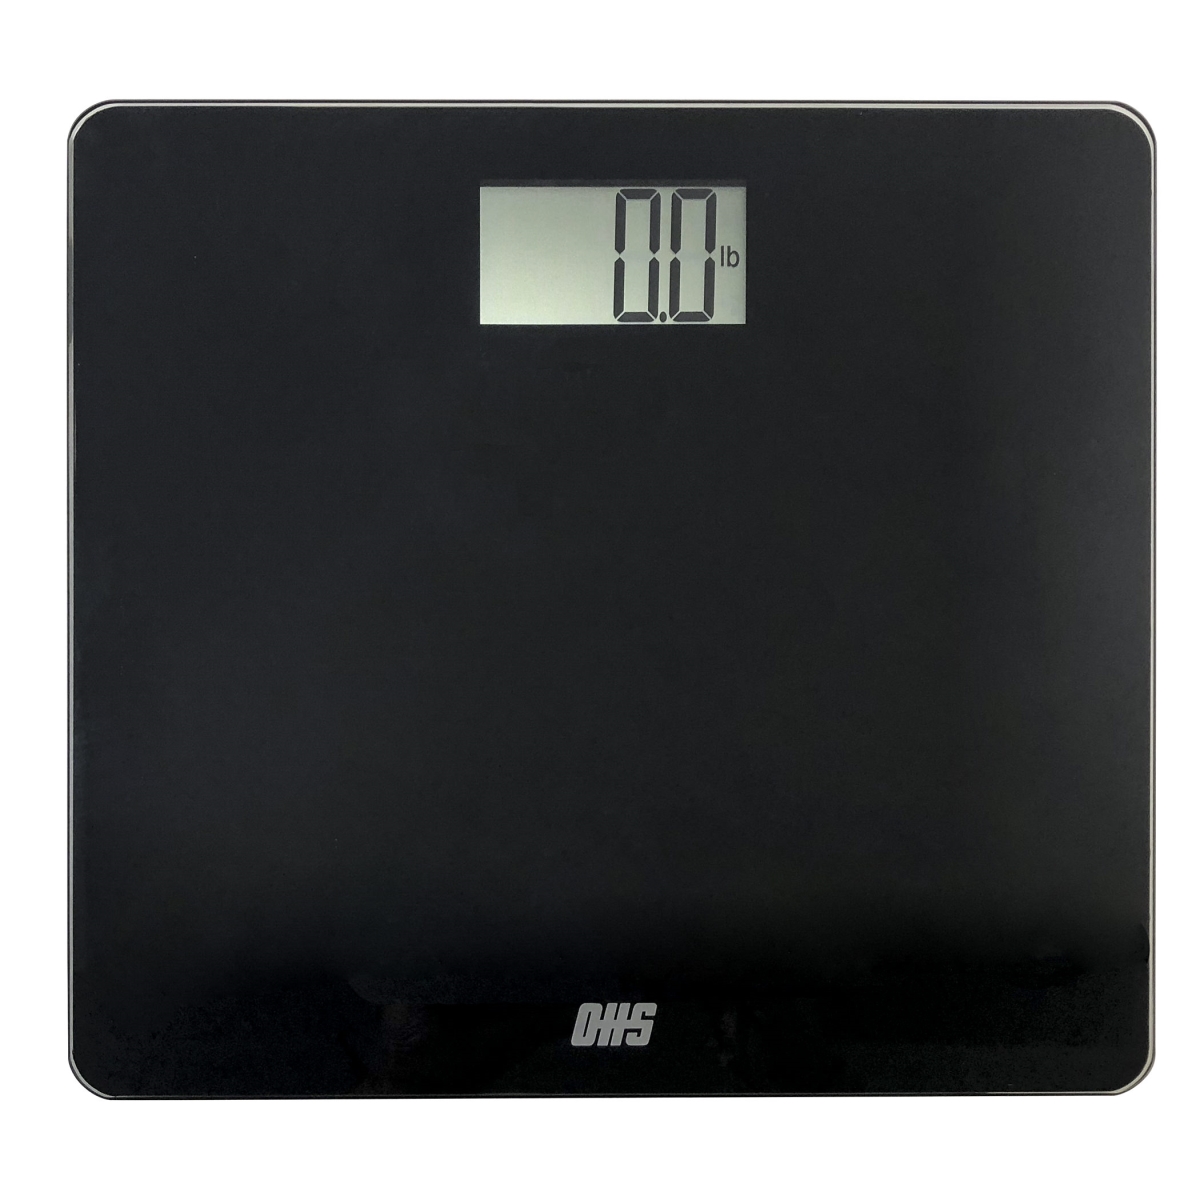 Optima Home Scales Tn-330 Tone Bathroom Weight Scale, Black